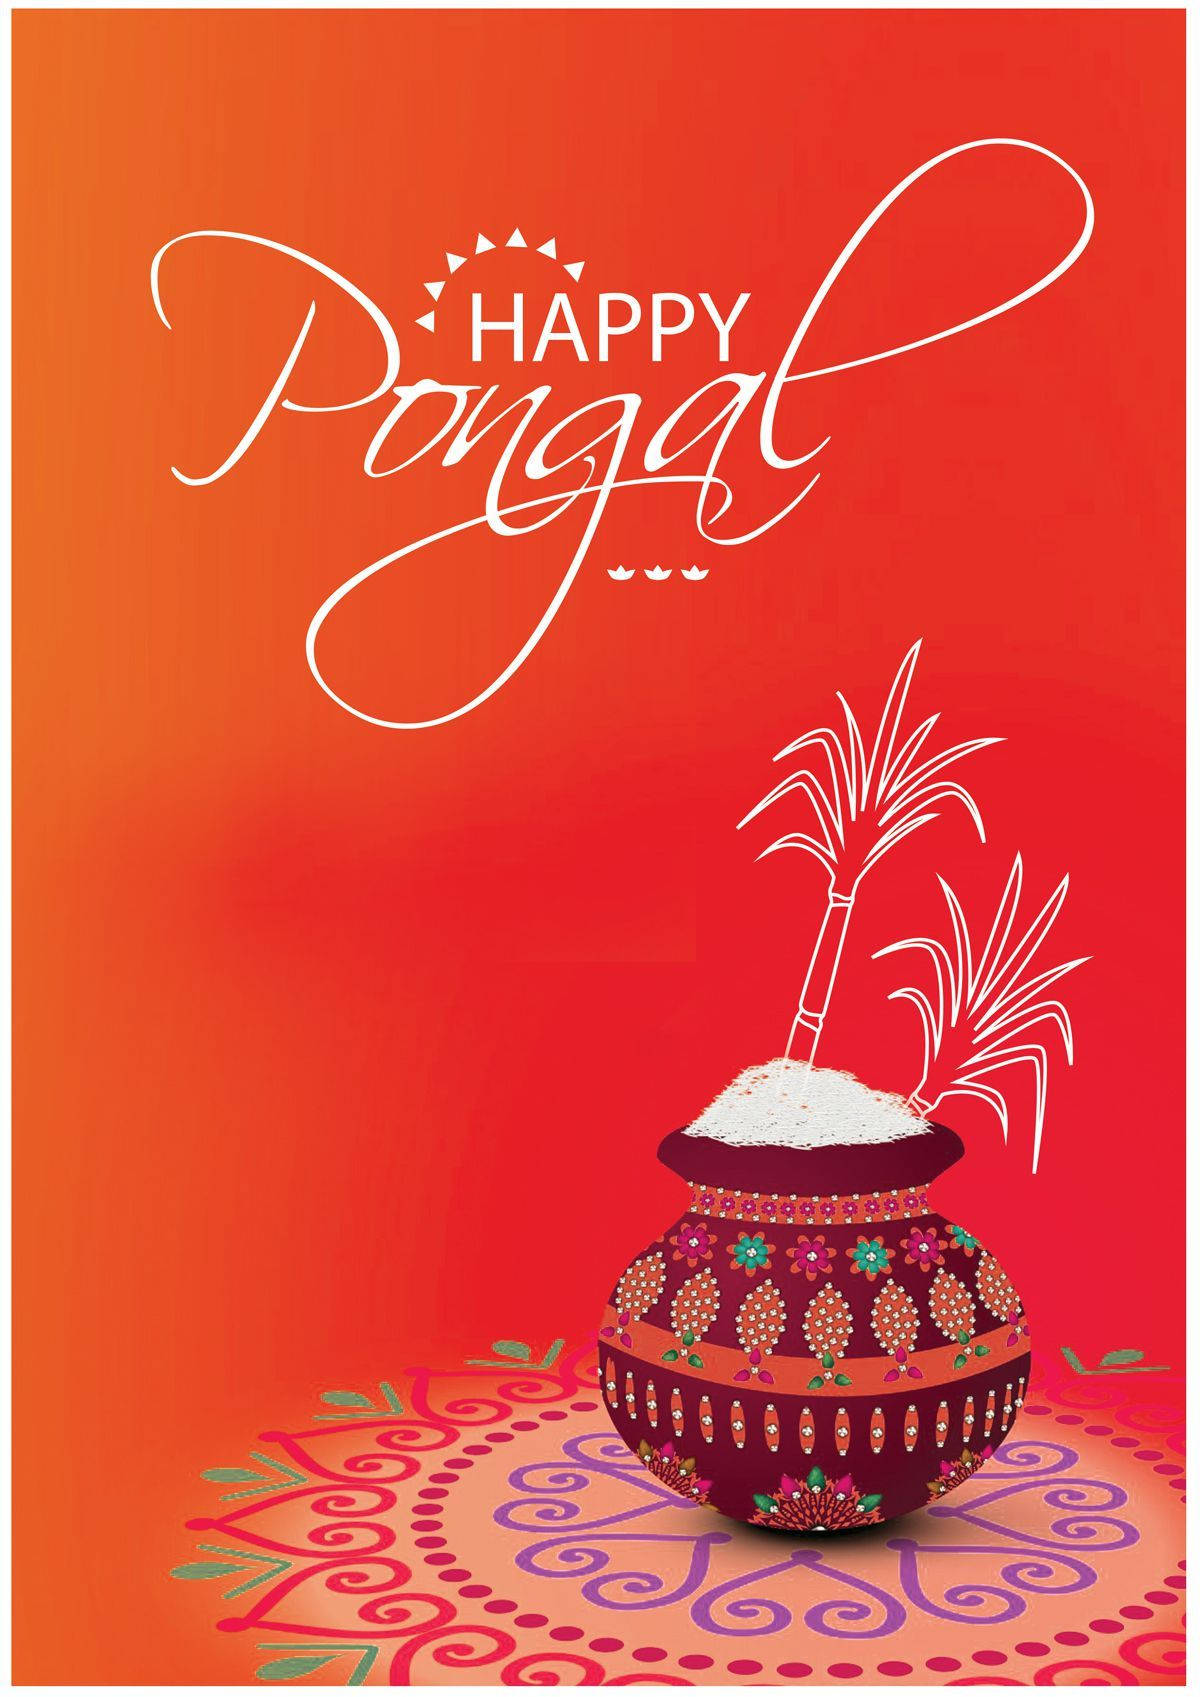 Happy Pongal Festivity Greetings Background